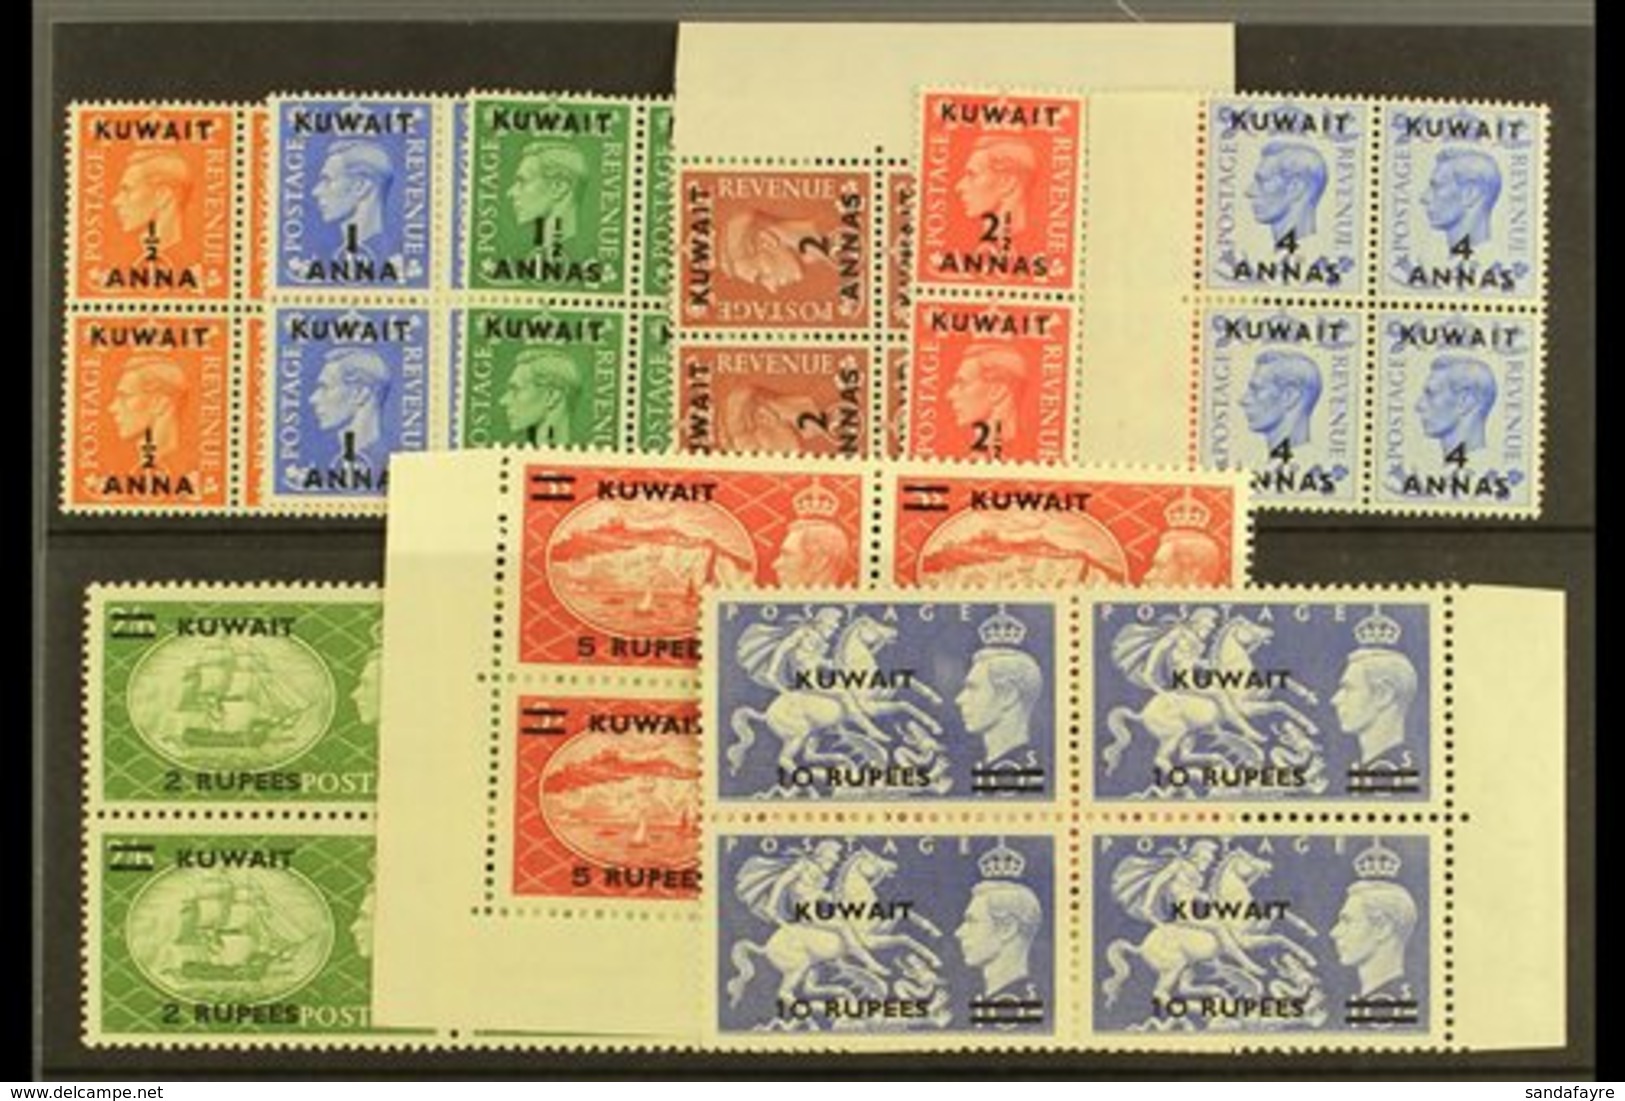 1950-4 KGVI GB Overprints Set In BLOCKS OF FOUR, SG 84/92, Fine, Never Hinged Mint (9 Blocks). For More Images, Please V - Kuwait